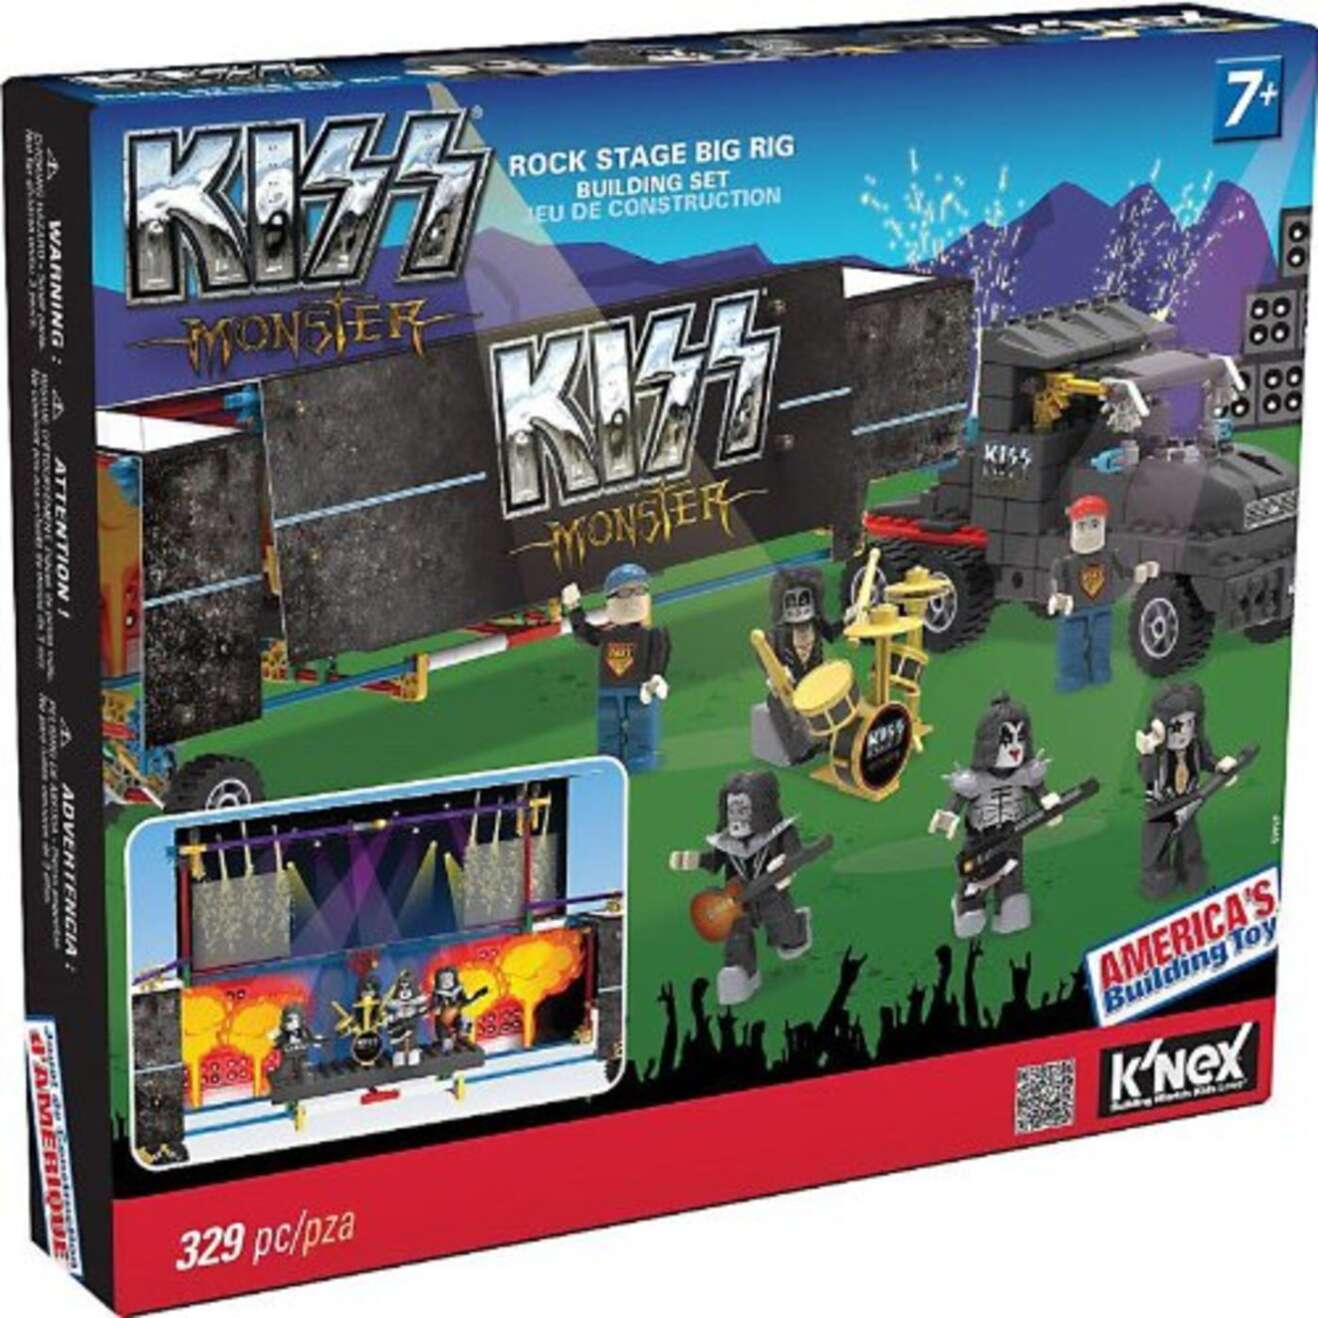 KISS Rock Stage Big Rig Building Set